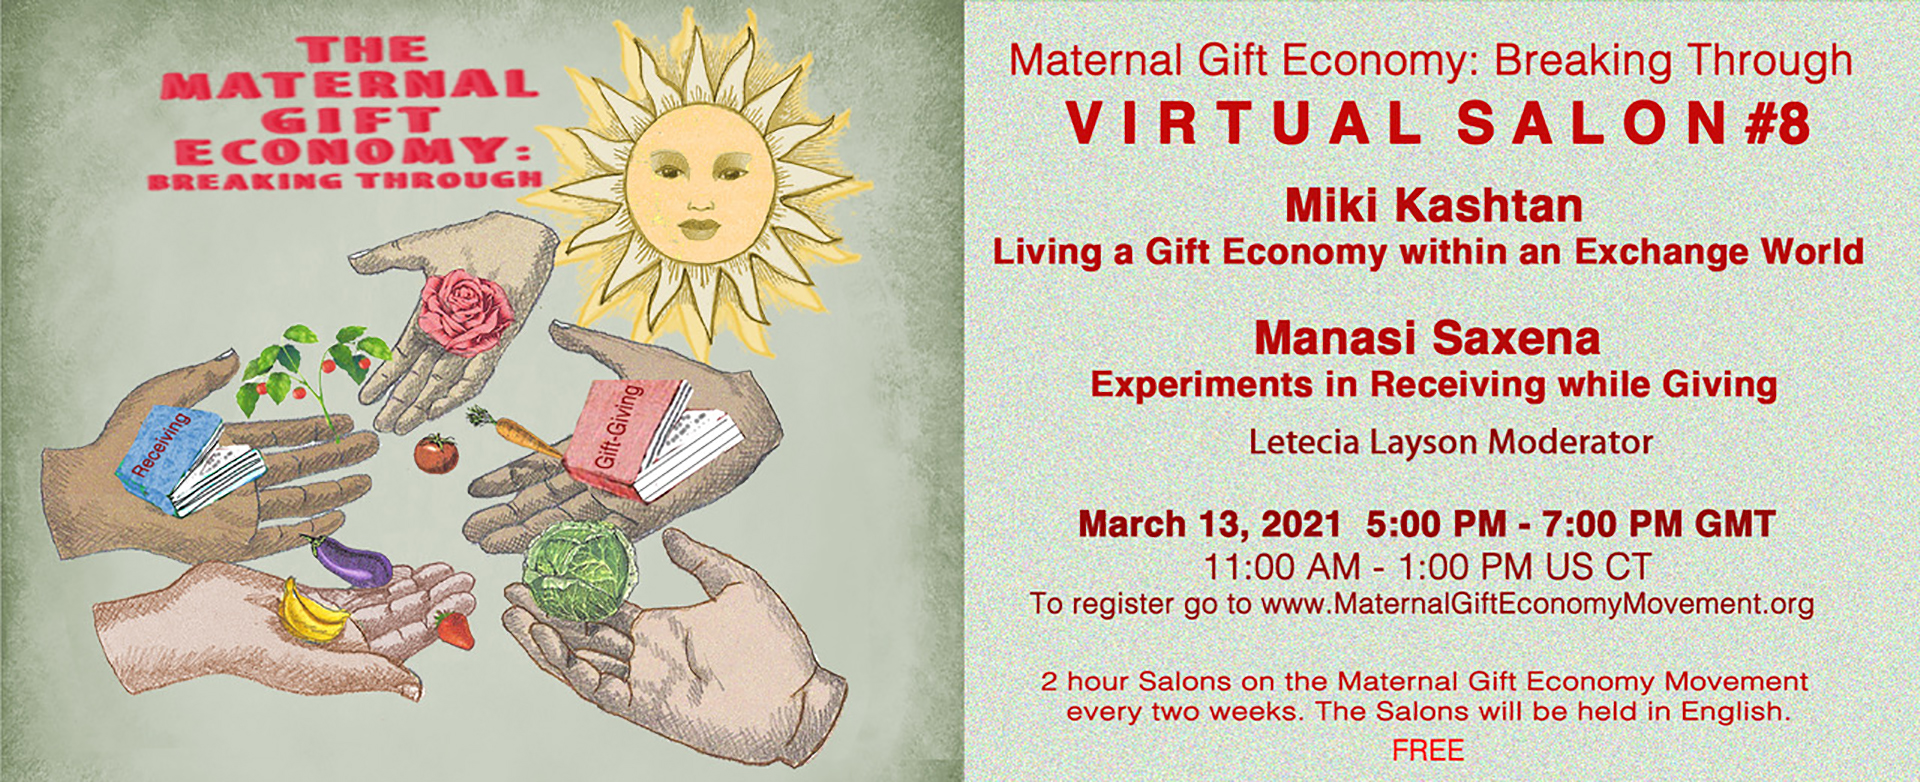 Maternal Gift Economy Salon #8